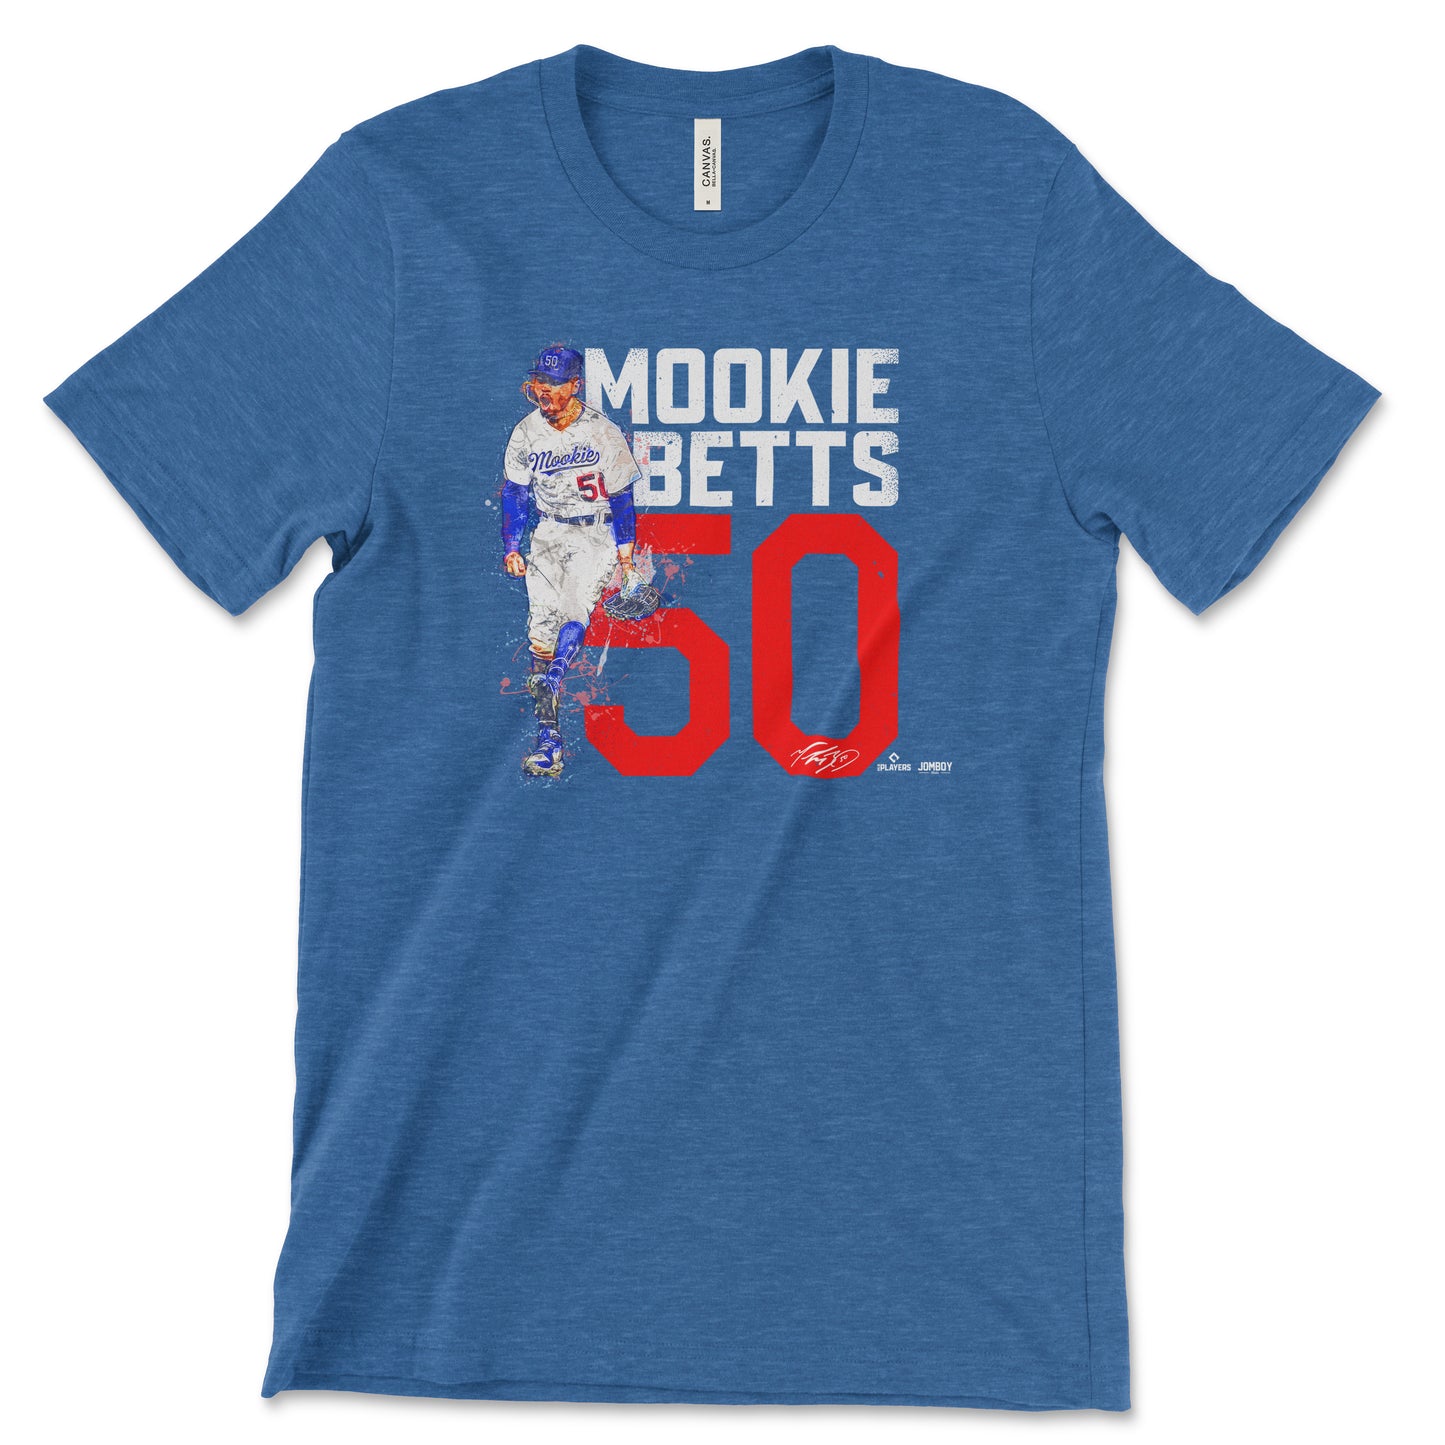 Mookie Betts Jerseys, Mookie Betts Shirts, Clothing